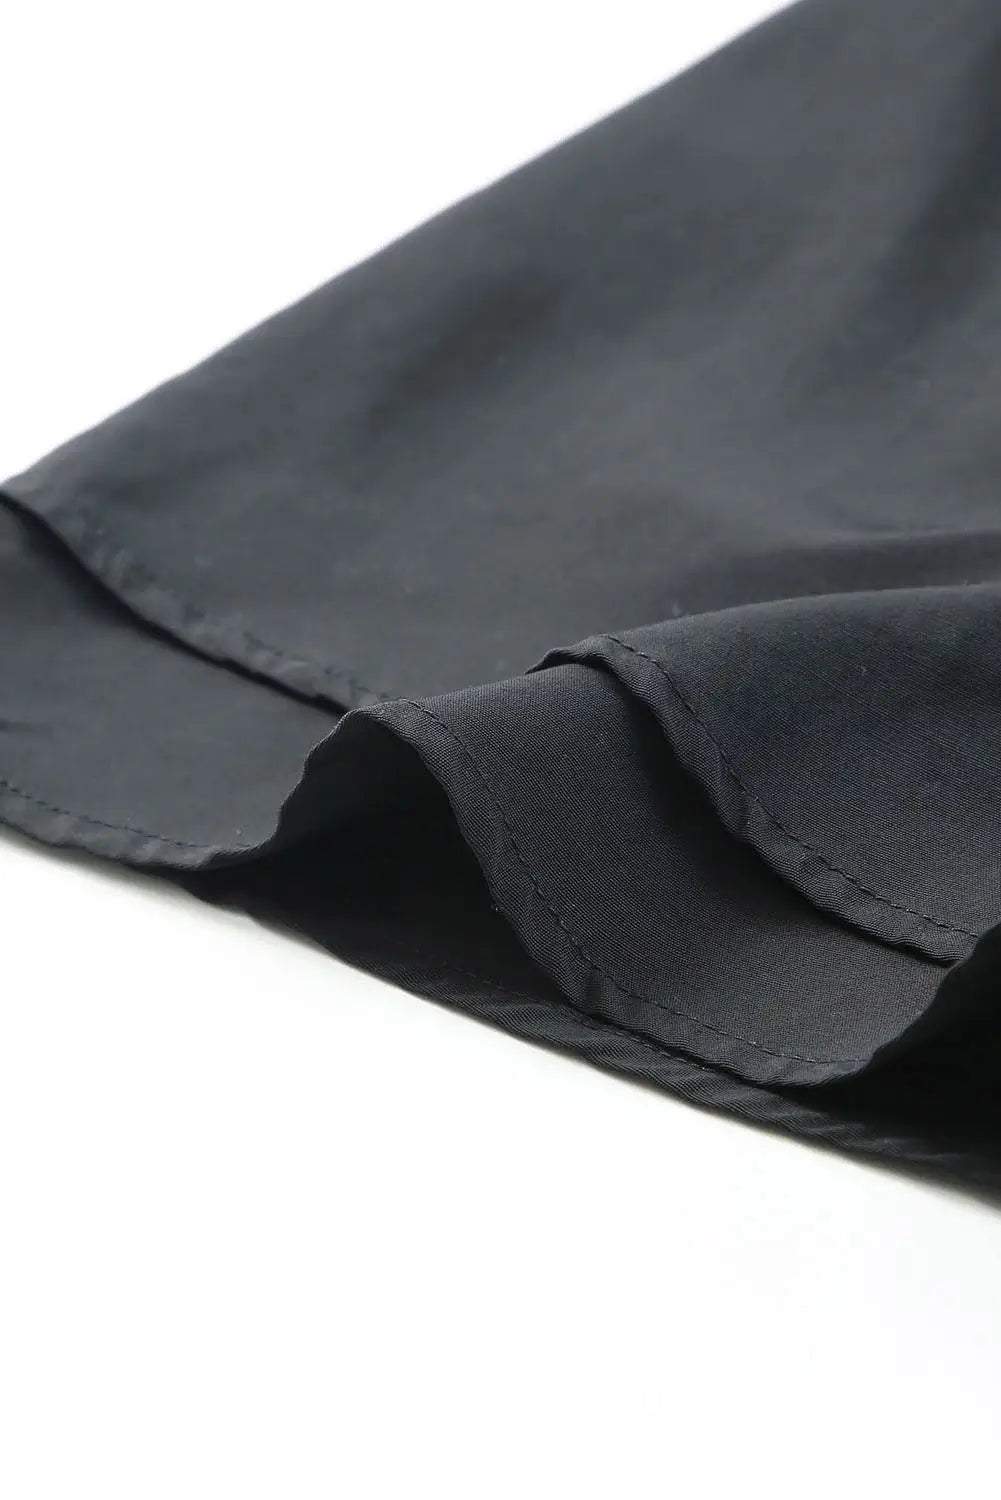 Black ruffle sleeves solid romper - jumpsuits & rompers